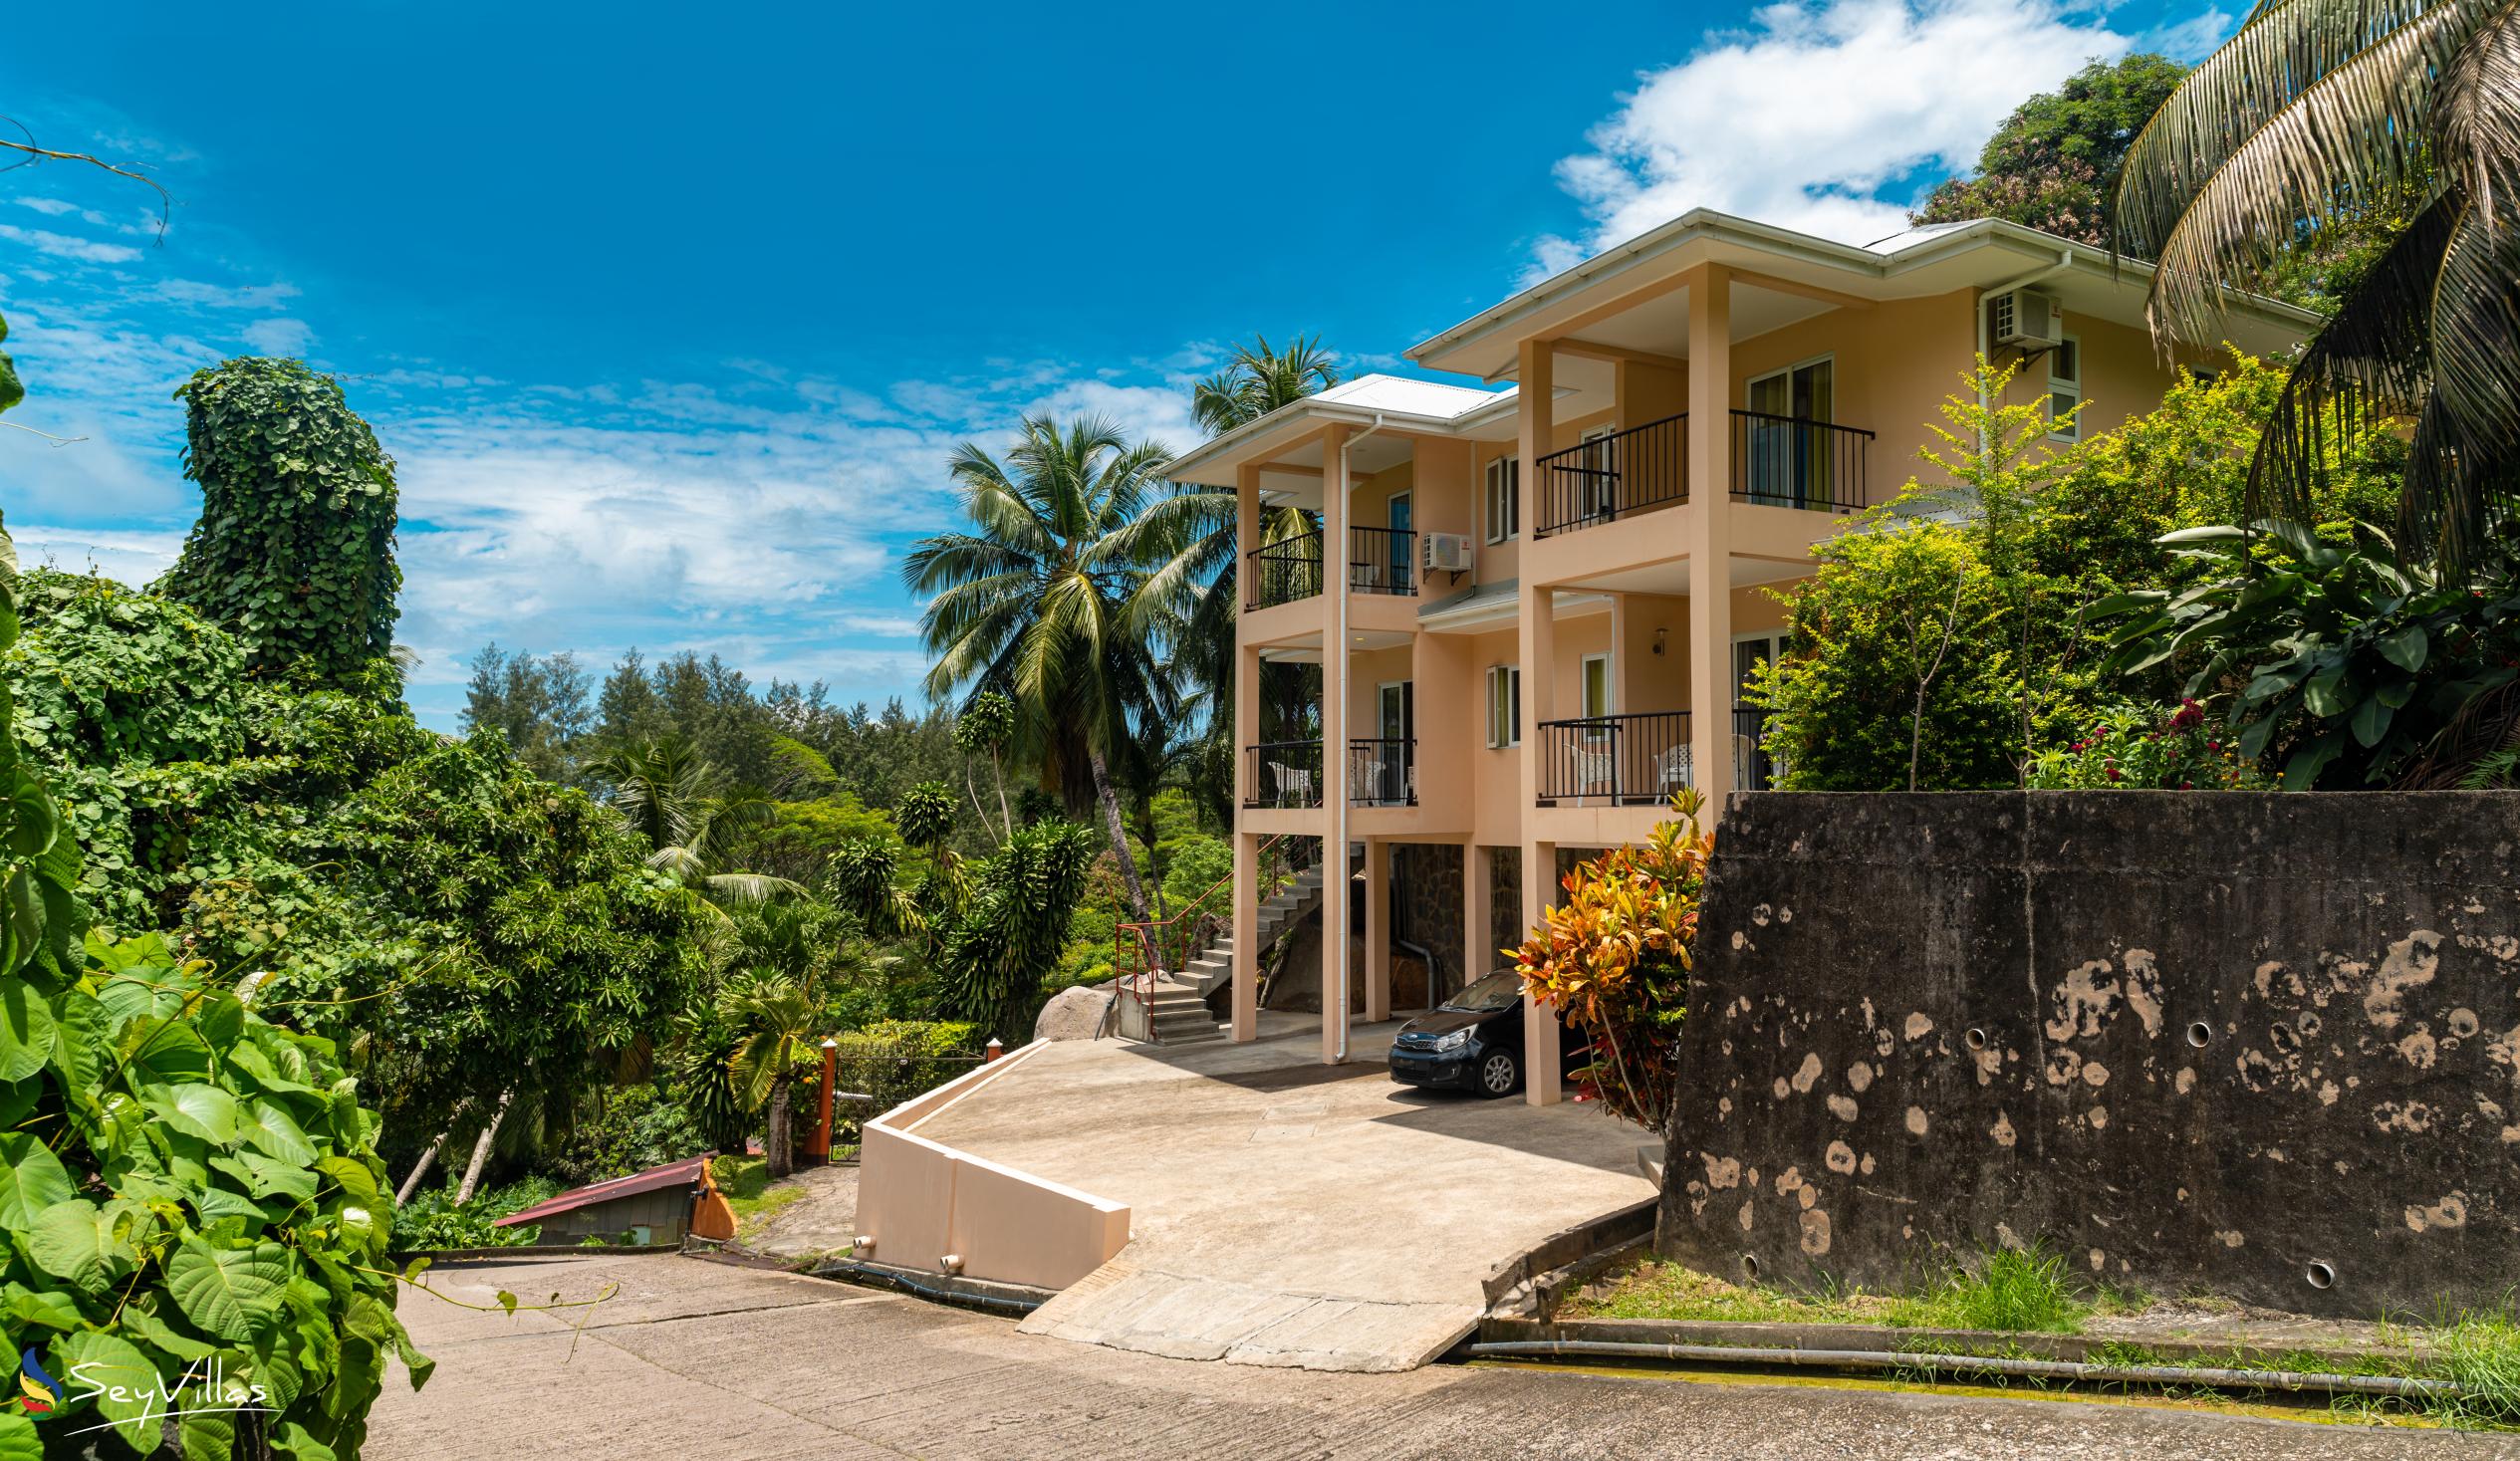 Photo 4: JAIDSS Holiday Apartments - Outdoor area - Mahé (Seychelles)